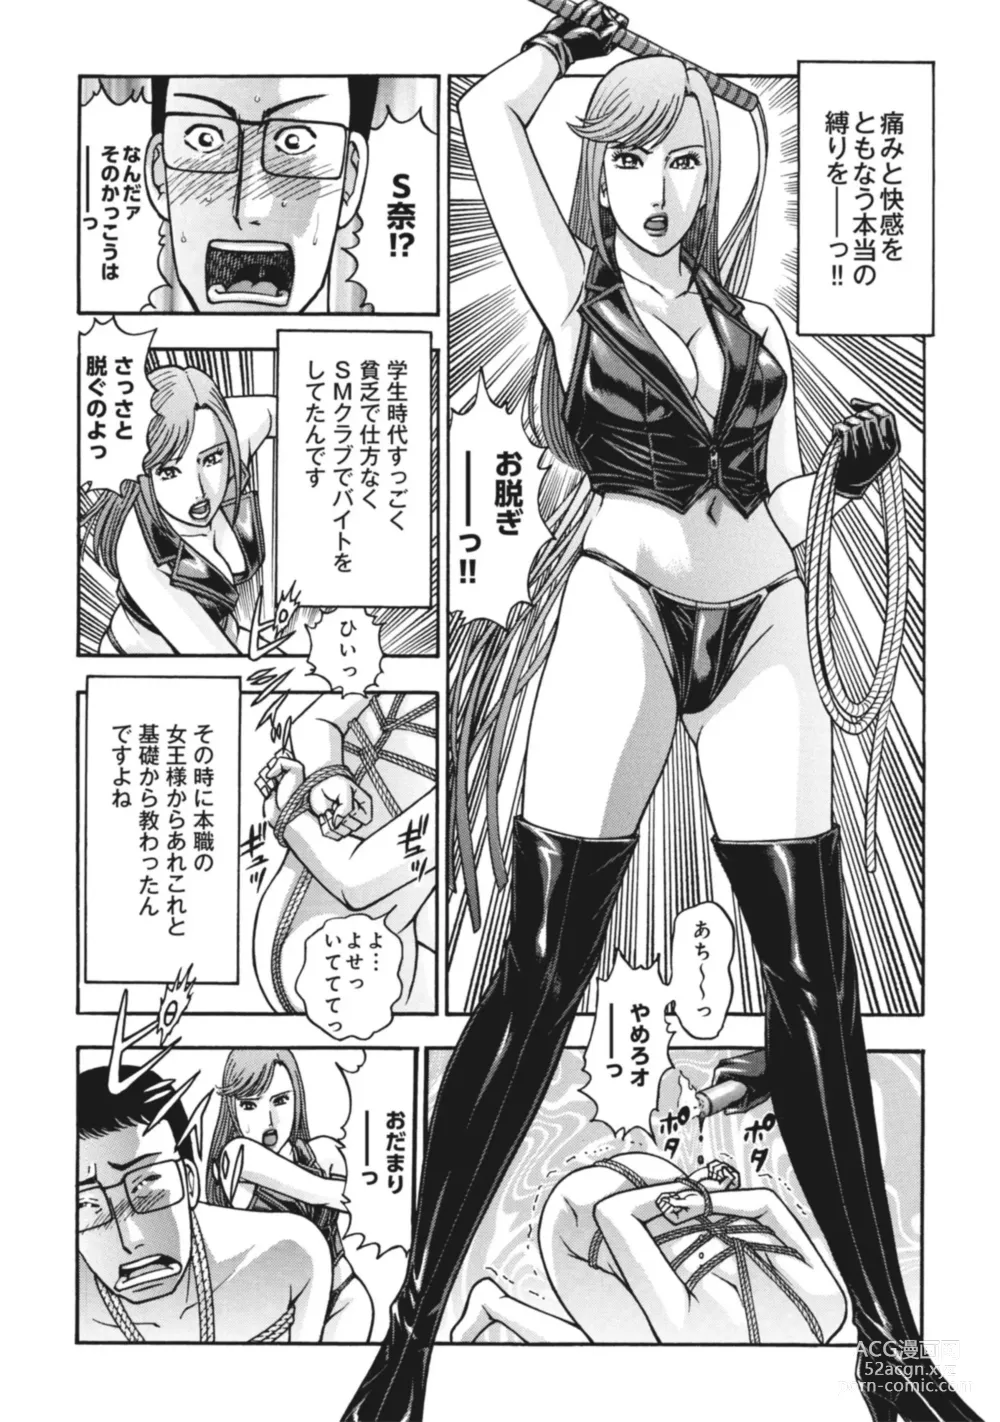 Page 13 of manga Renai Kaunserā Maki no Teisō Fairu 1